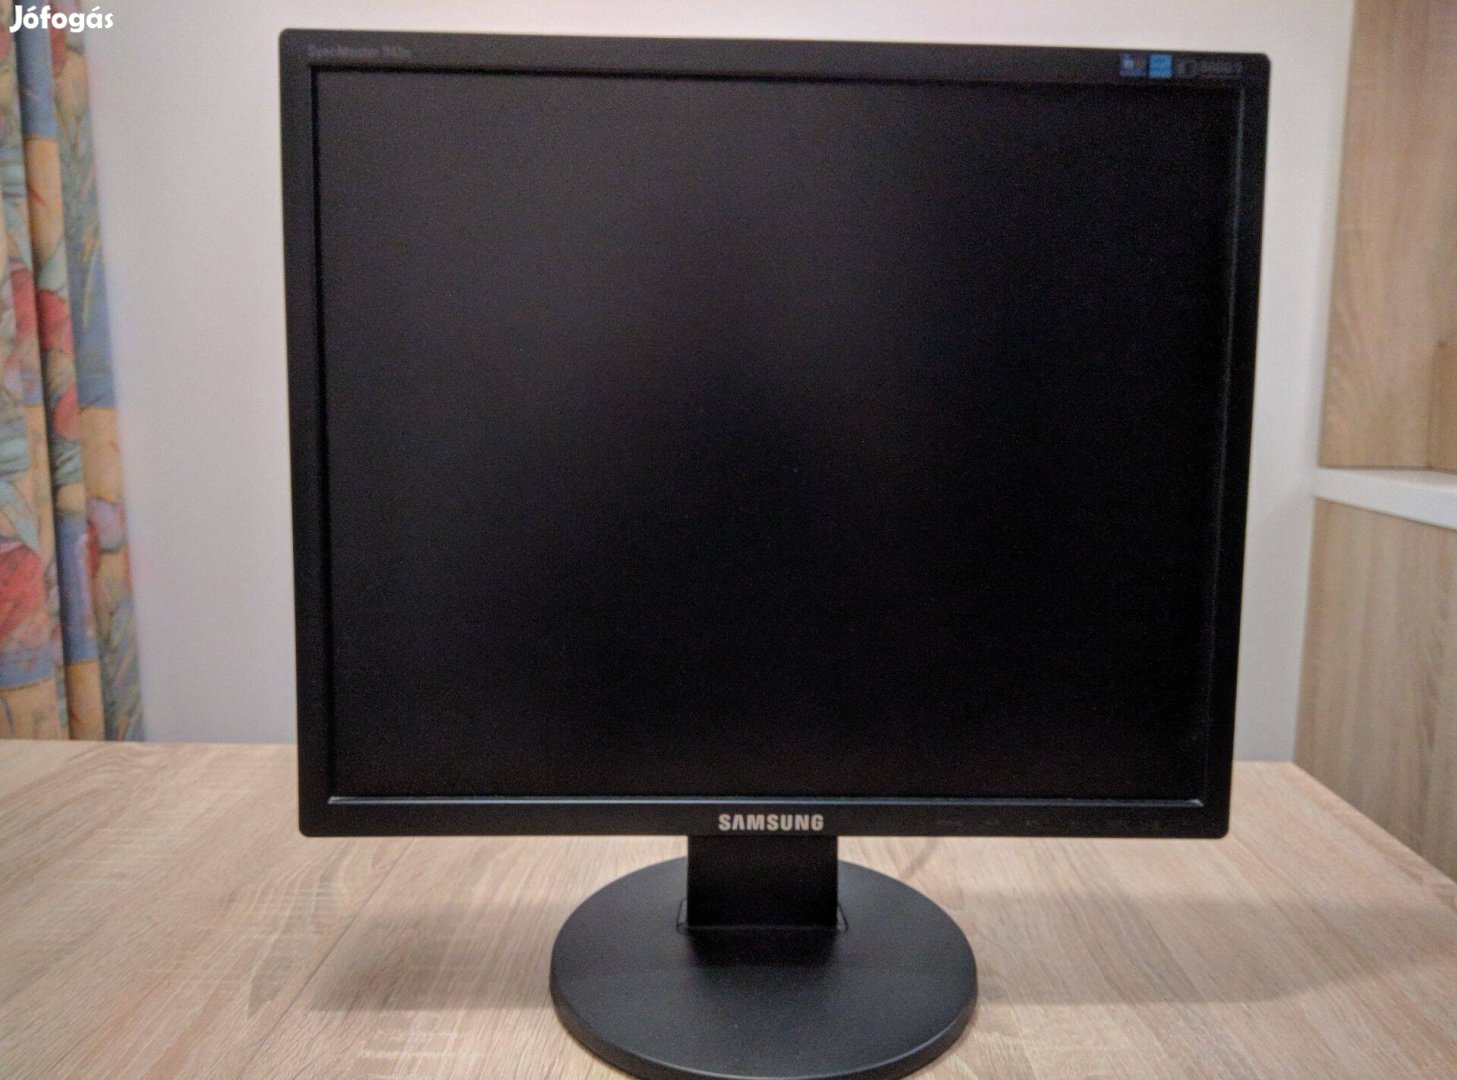 Samsung Syncmaster 943n monitor